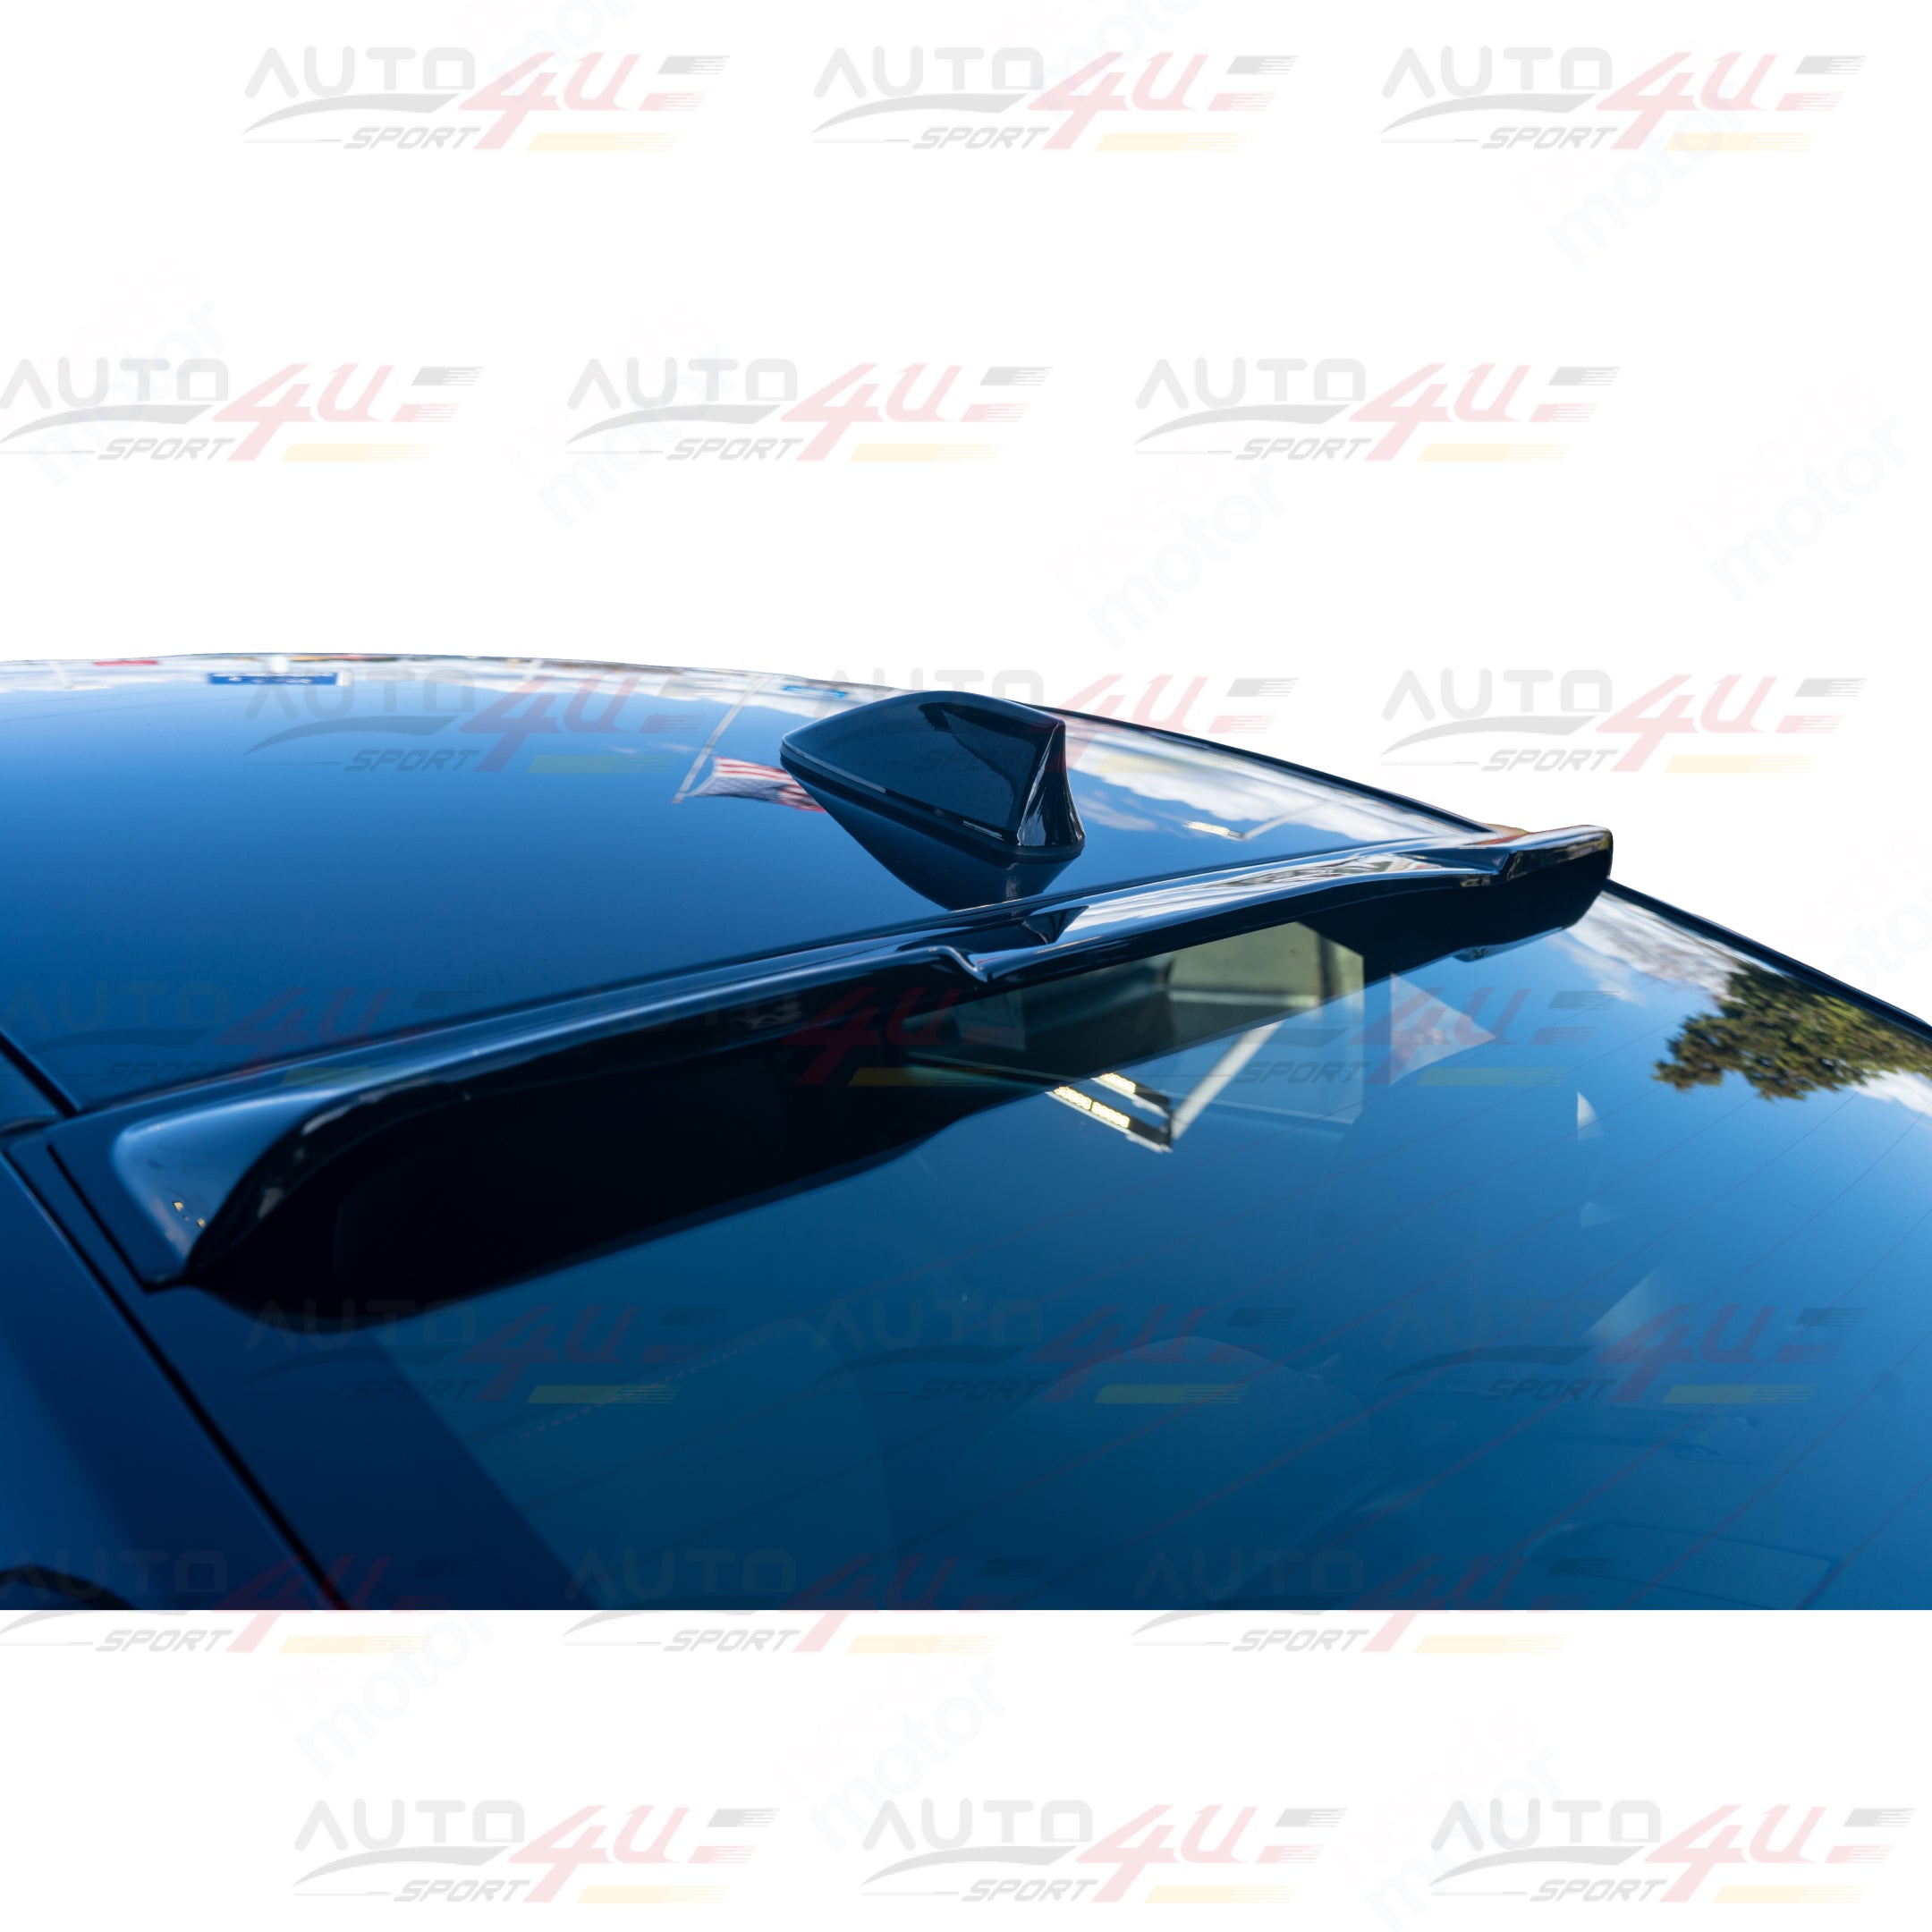 Fits for 2014-2021 Mazda6 Gloss Black ABS Rear Roof Window Visor Spoiler Wing